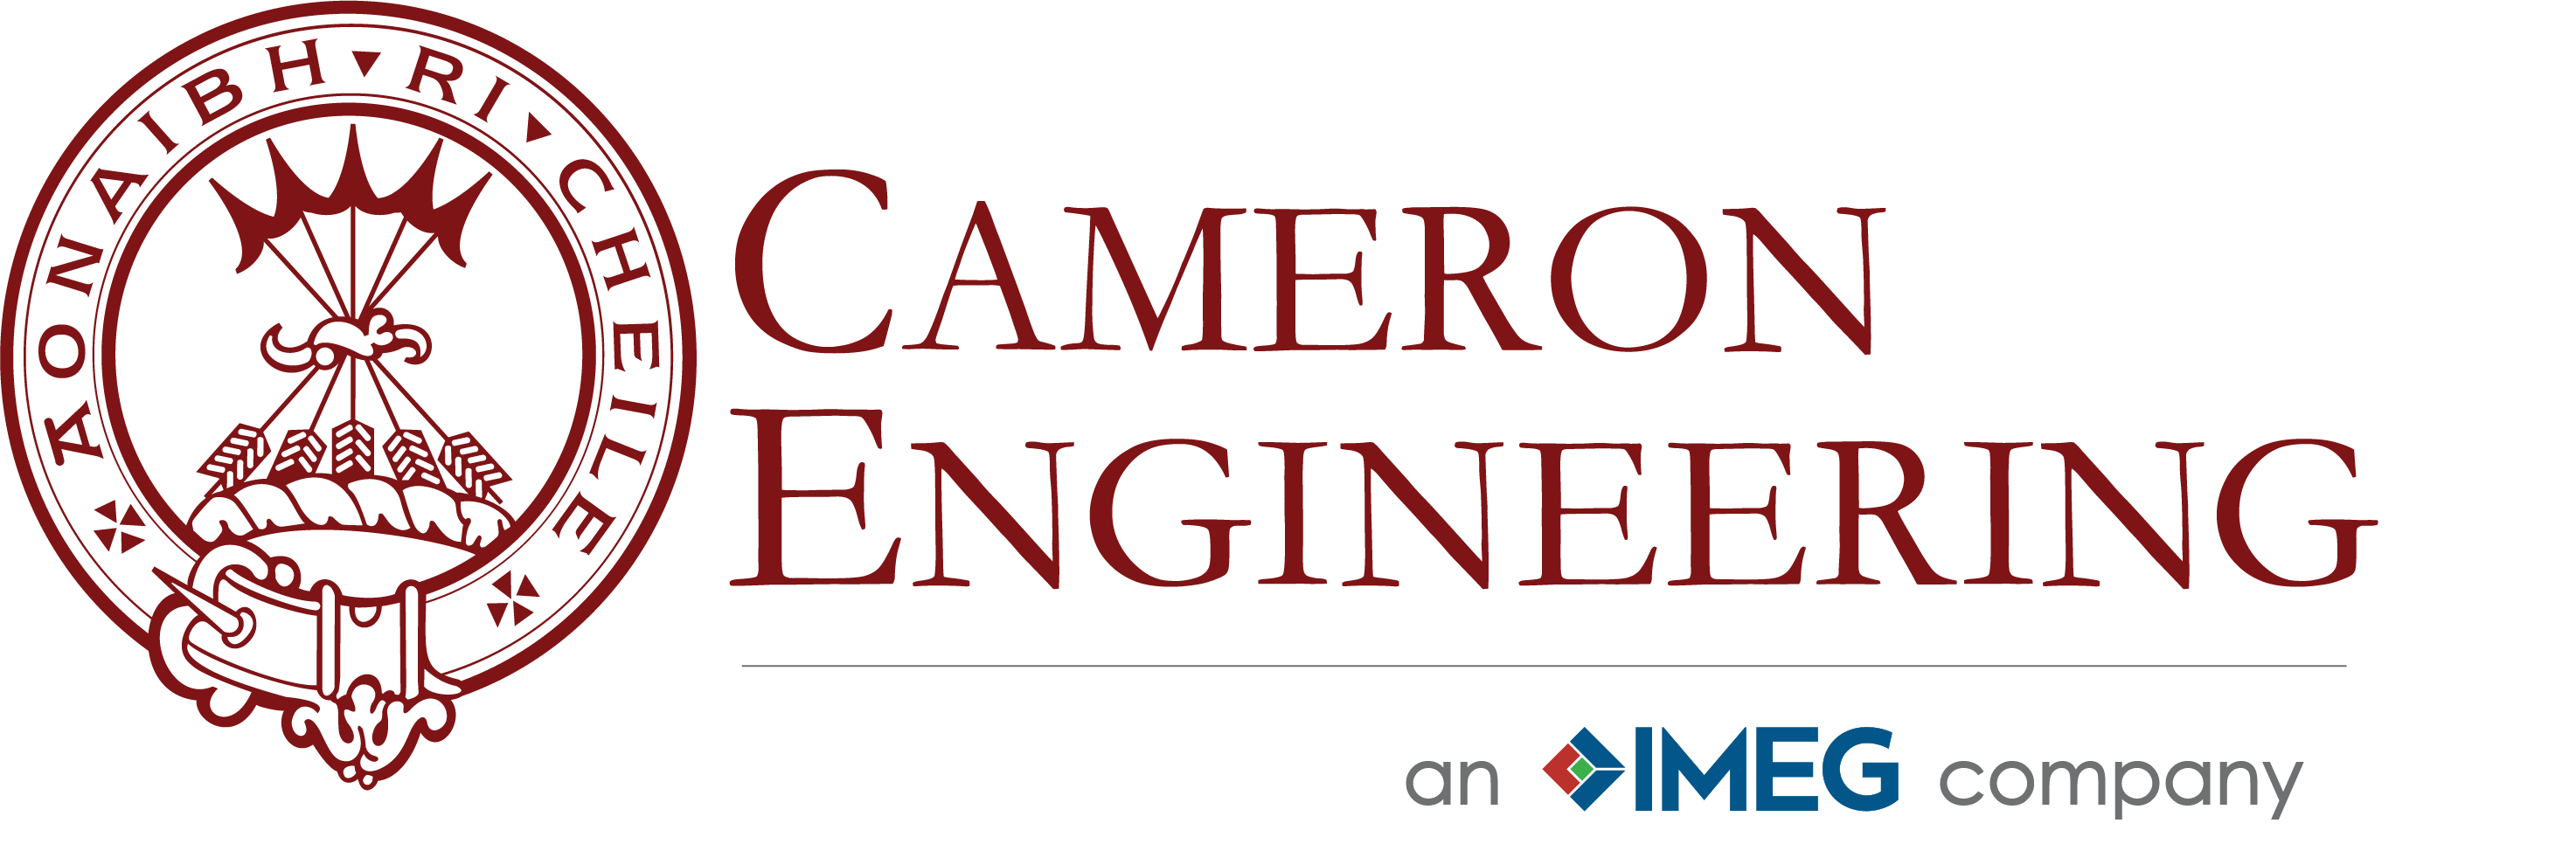 cameron engineering logo